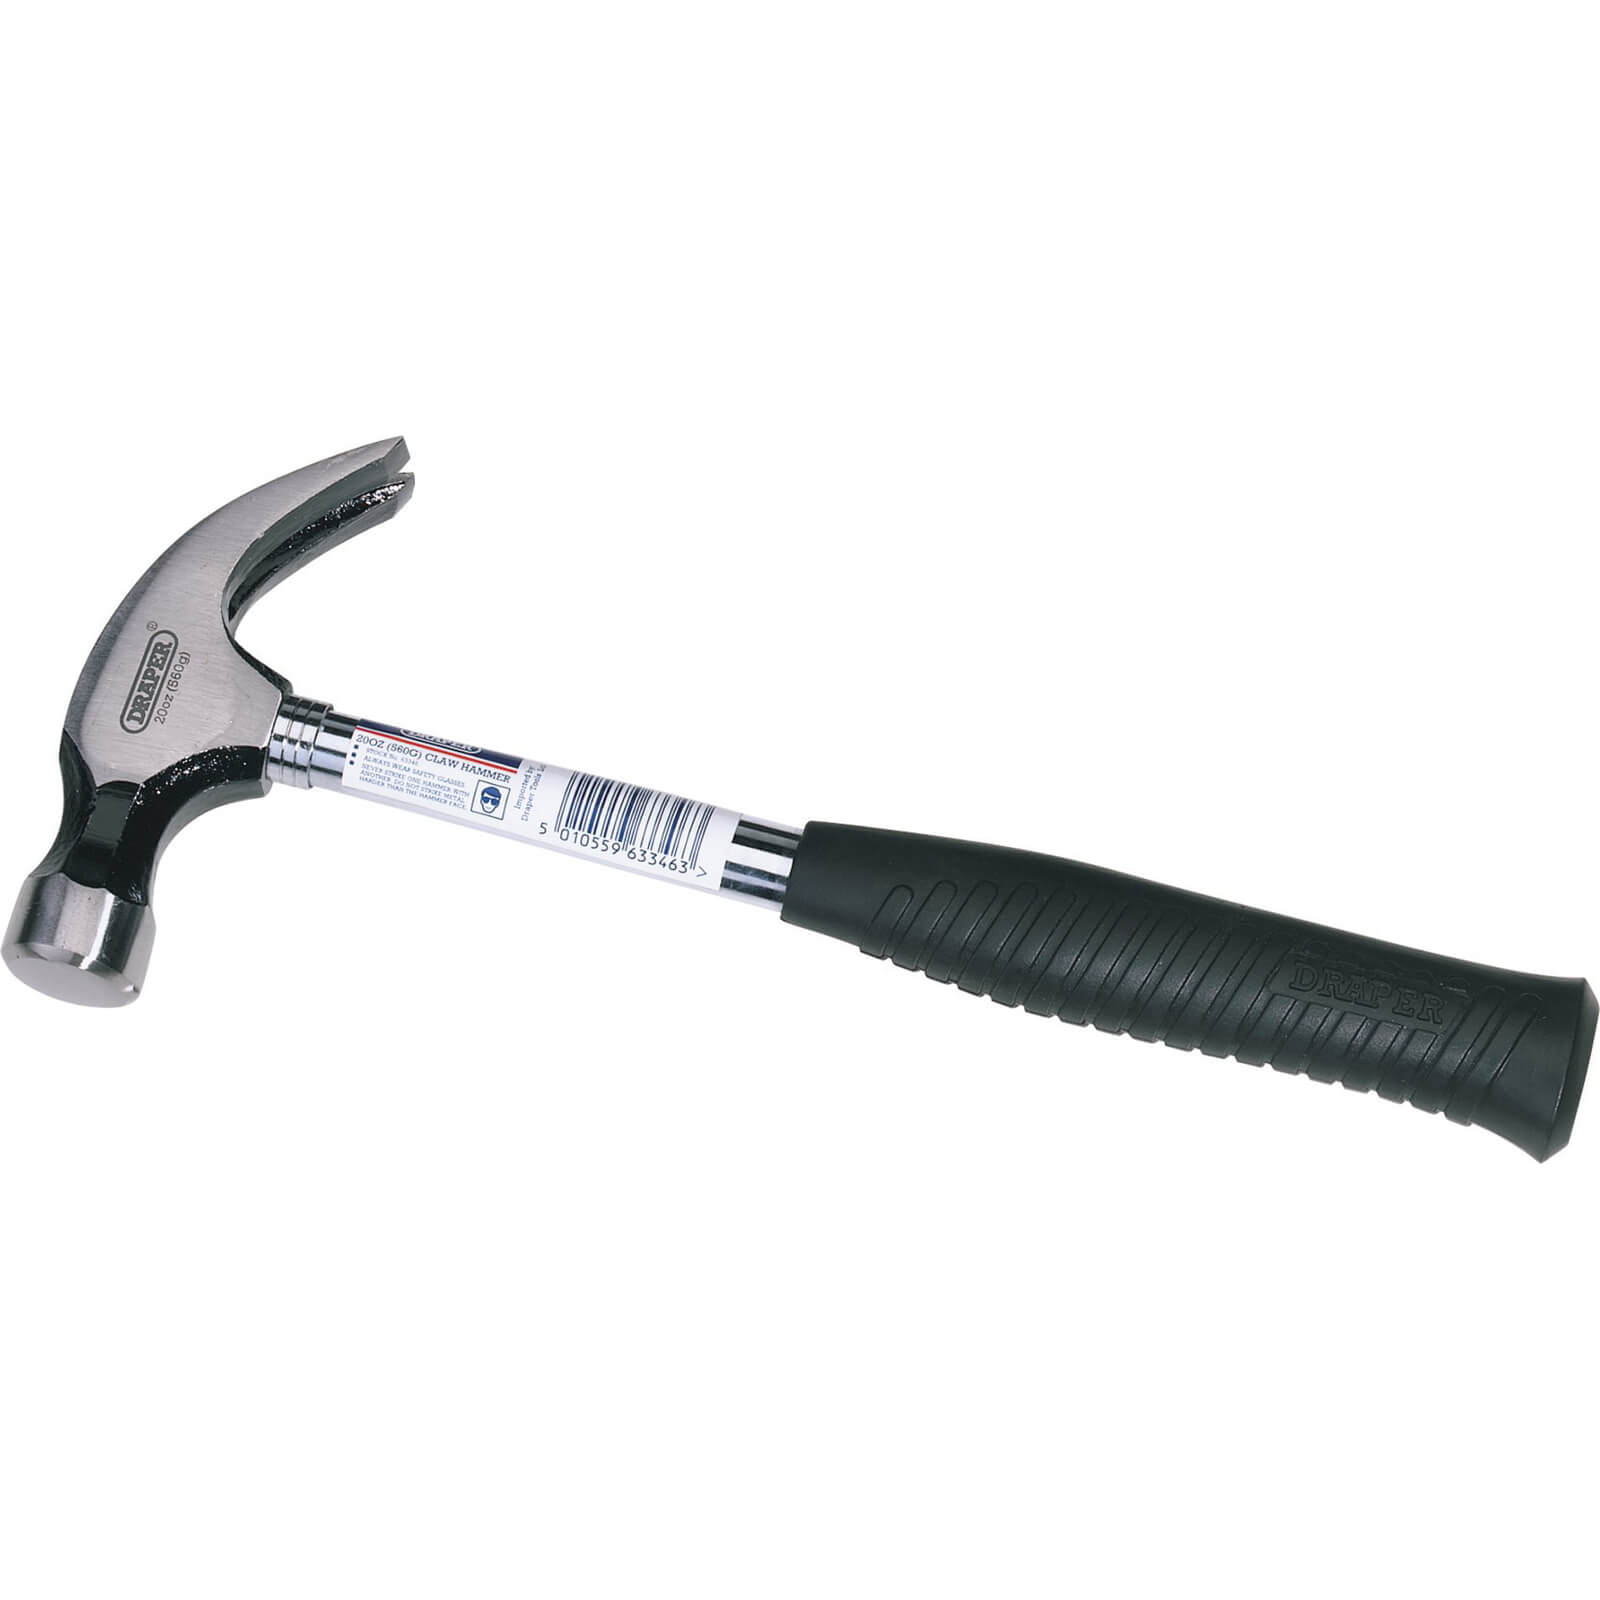 Image of Draper Claw Hammer 560g